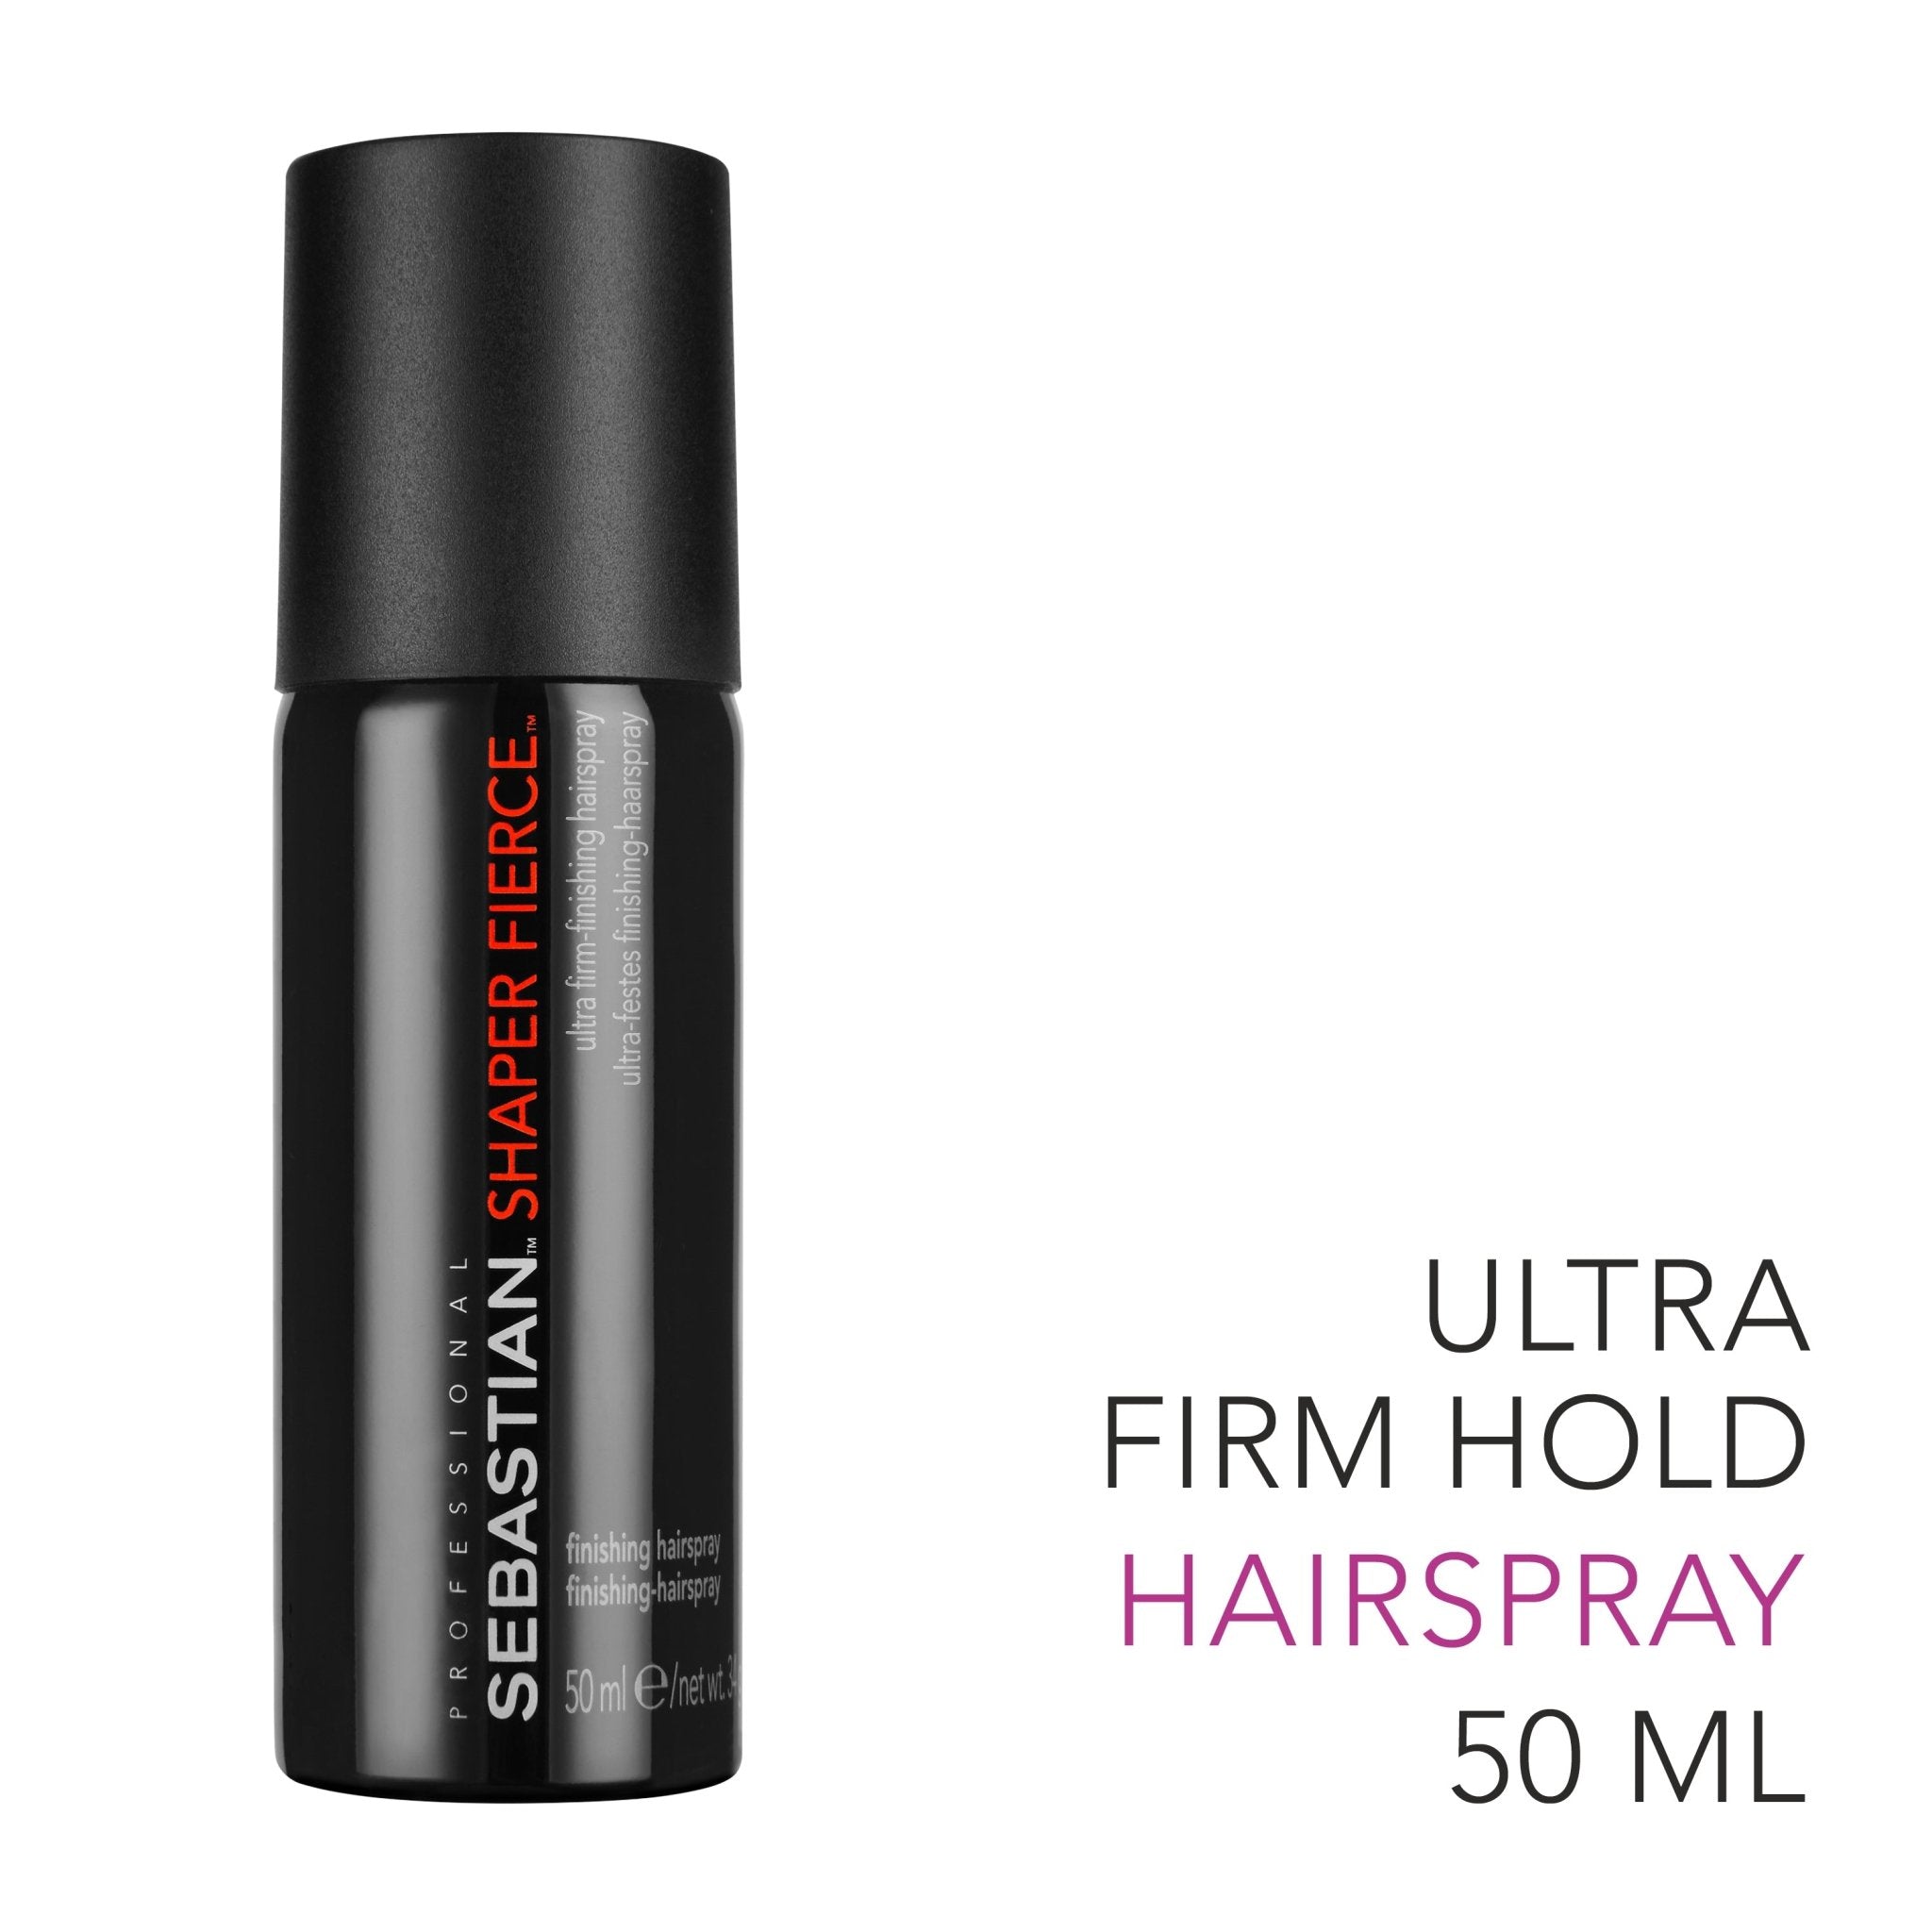 Sebastian - Texture Maker (Non-Aerosol Texturizing Hairspray) 150ml/5.07oz  - Styling Hair Spray | Free Worldwide Shipping | Strawberrynet PHEN